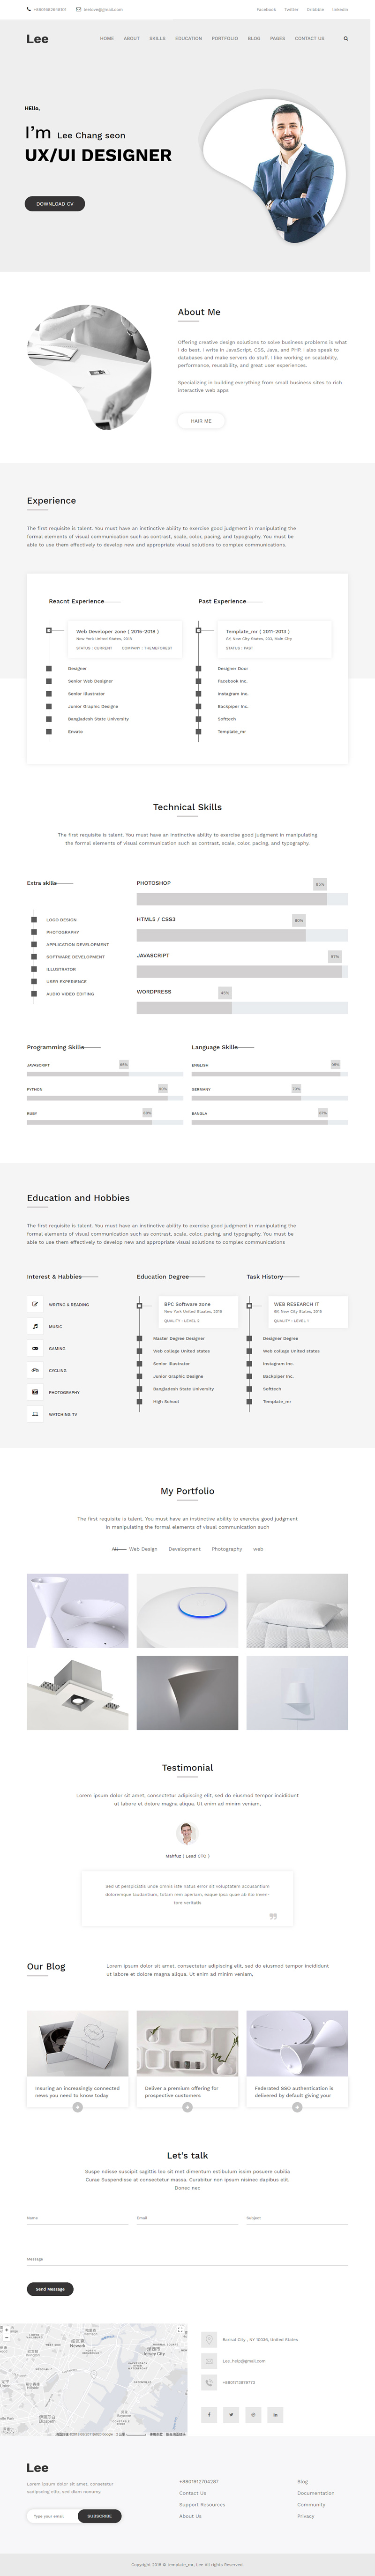 创意设计师个人网站Bootstrap4模板|Lee5638